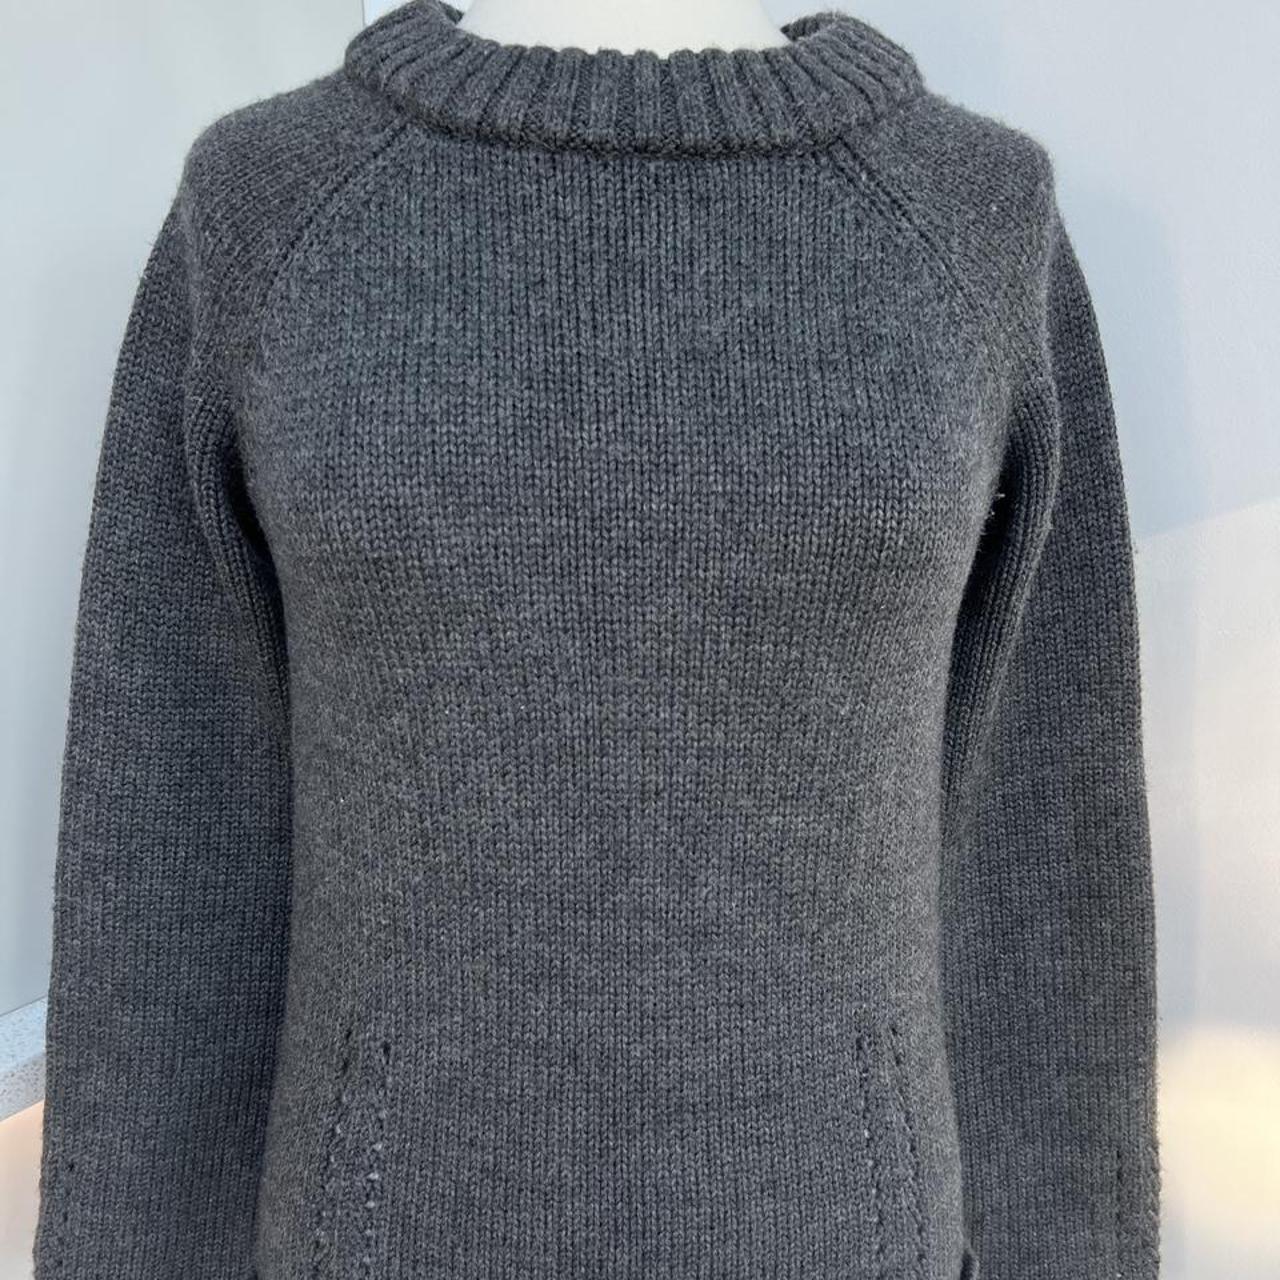 Karen Millen chunky knit grey 100% merino wool... - Depop